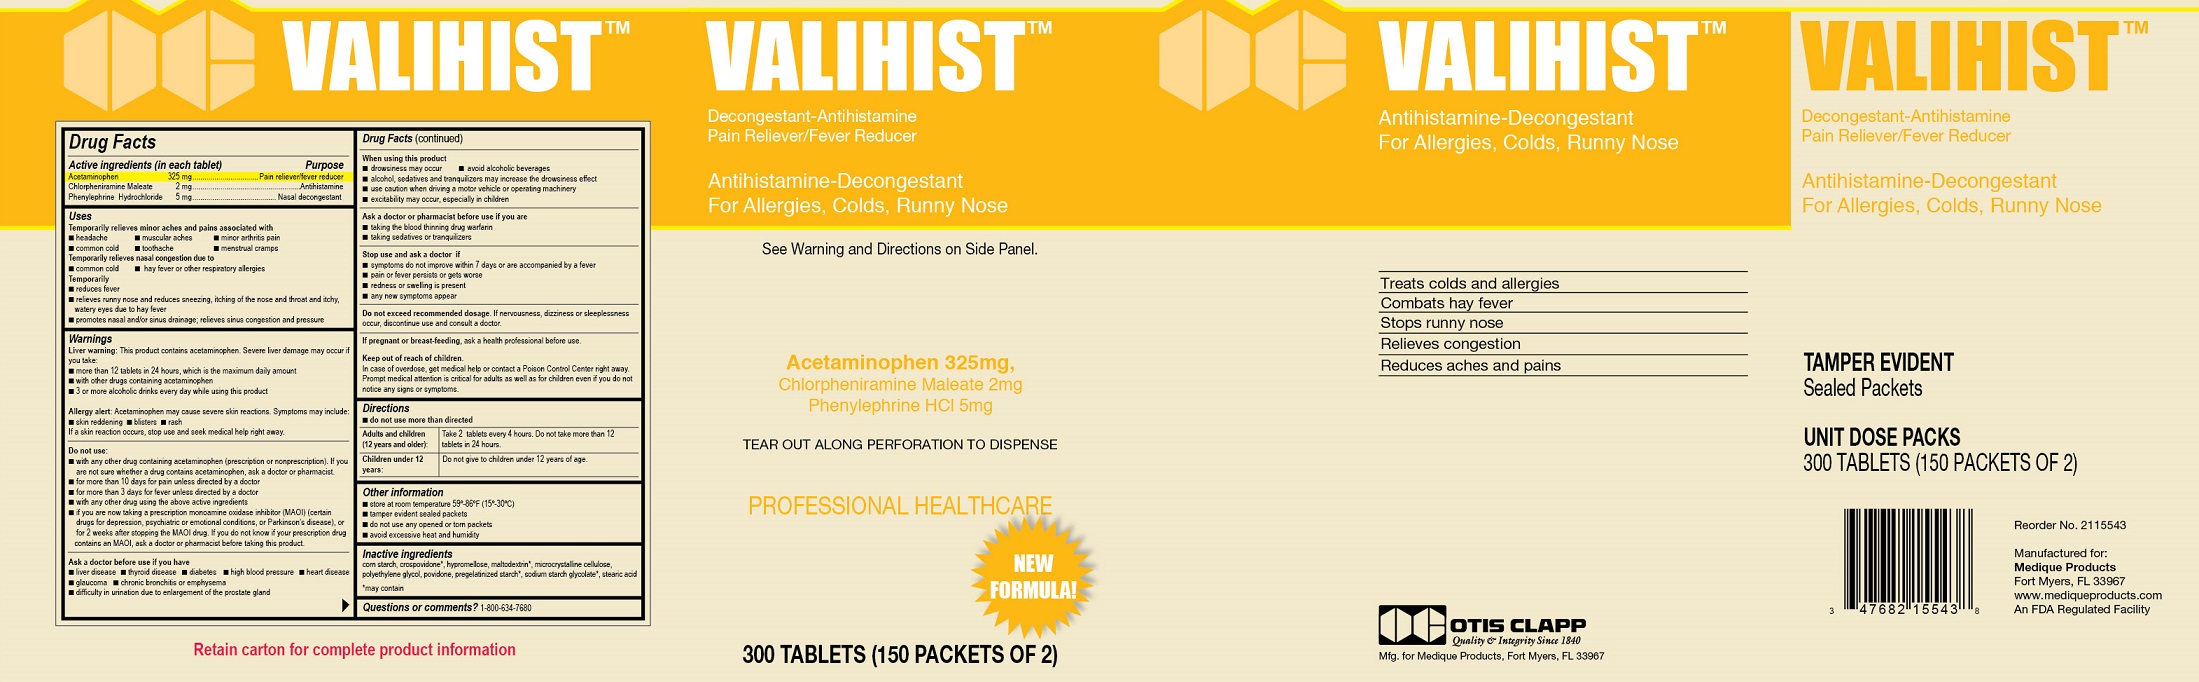 OC Valihist Label 2